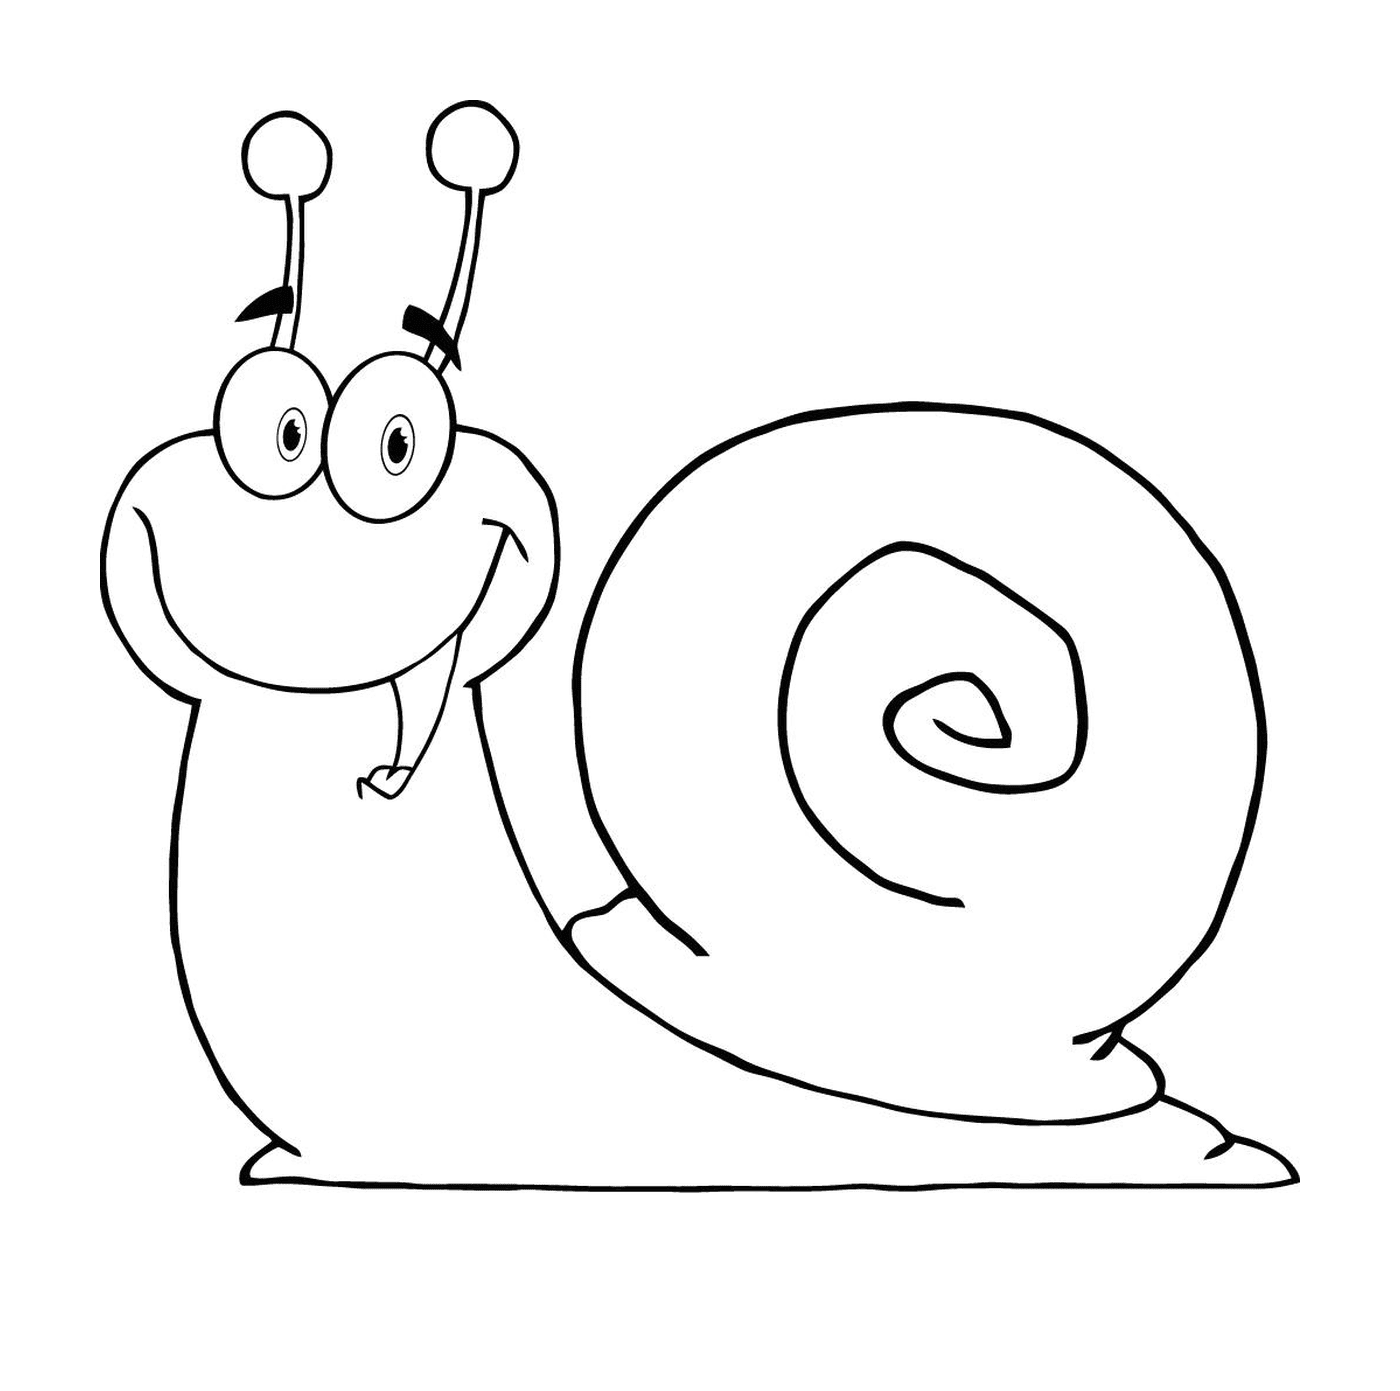  Happy and happy snail 